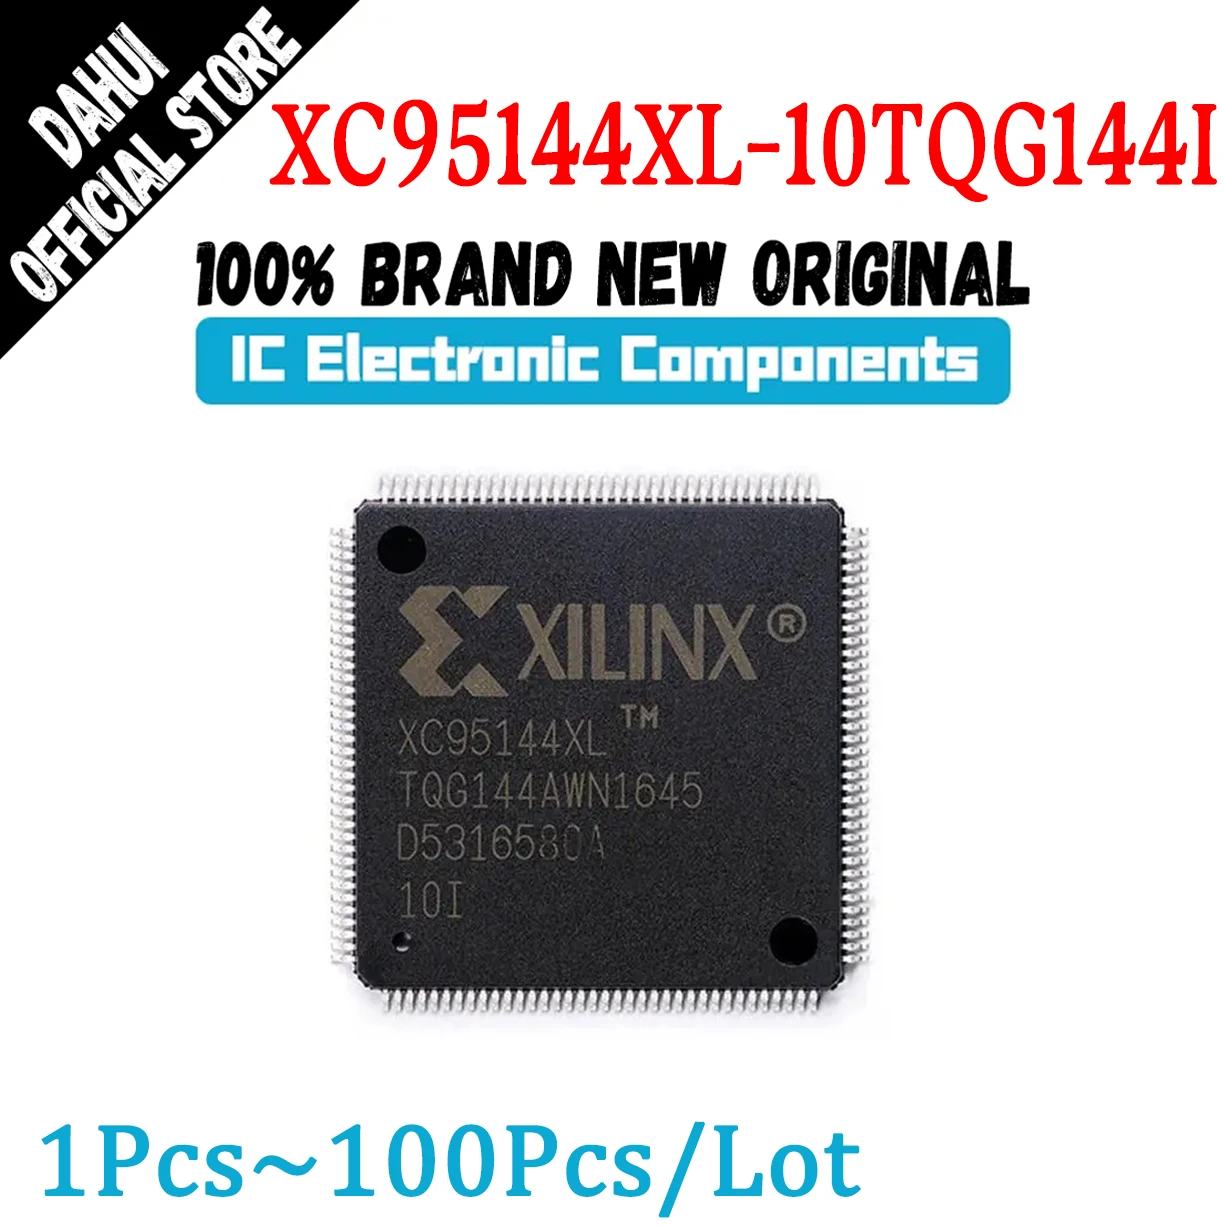 

New XC95144XL-10TQG144I XC95144XL-10TQG144 XC95144XL-10TQG XC95144XL-10 XC95144XL XC95144 XC IC Chip FPGA CPLD TQFP-144 In Stock